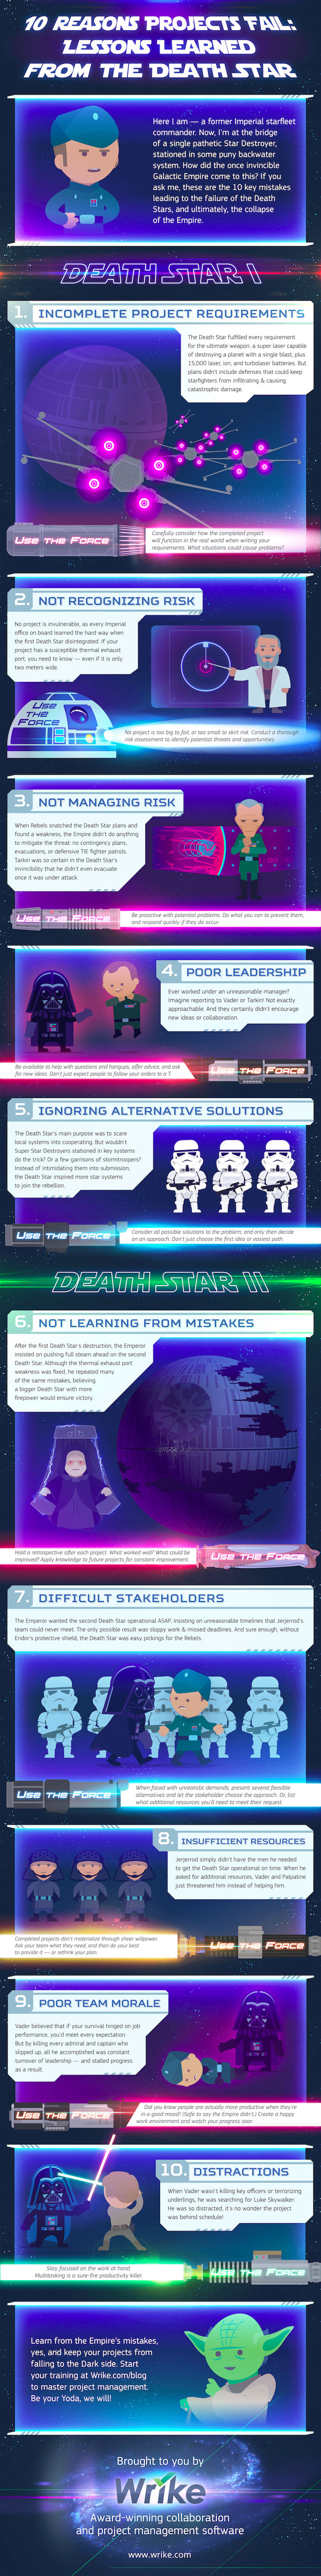 10 Reasons the Death Star Project Failed